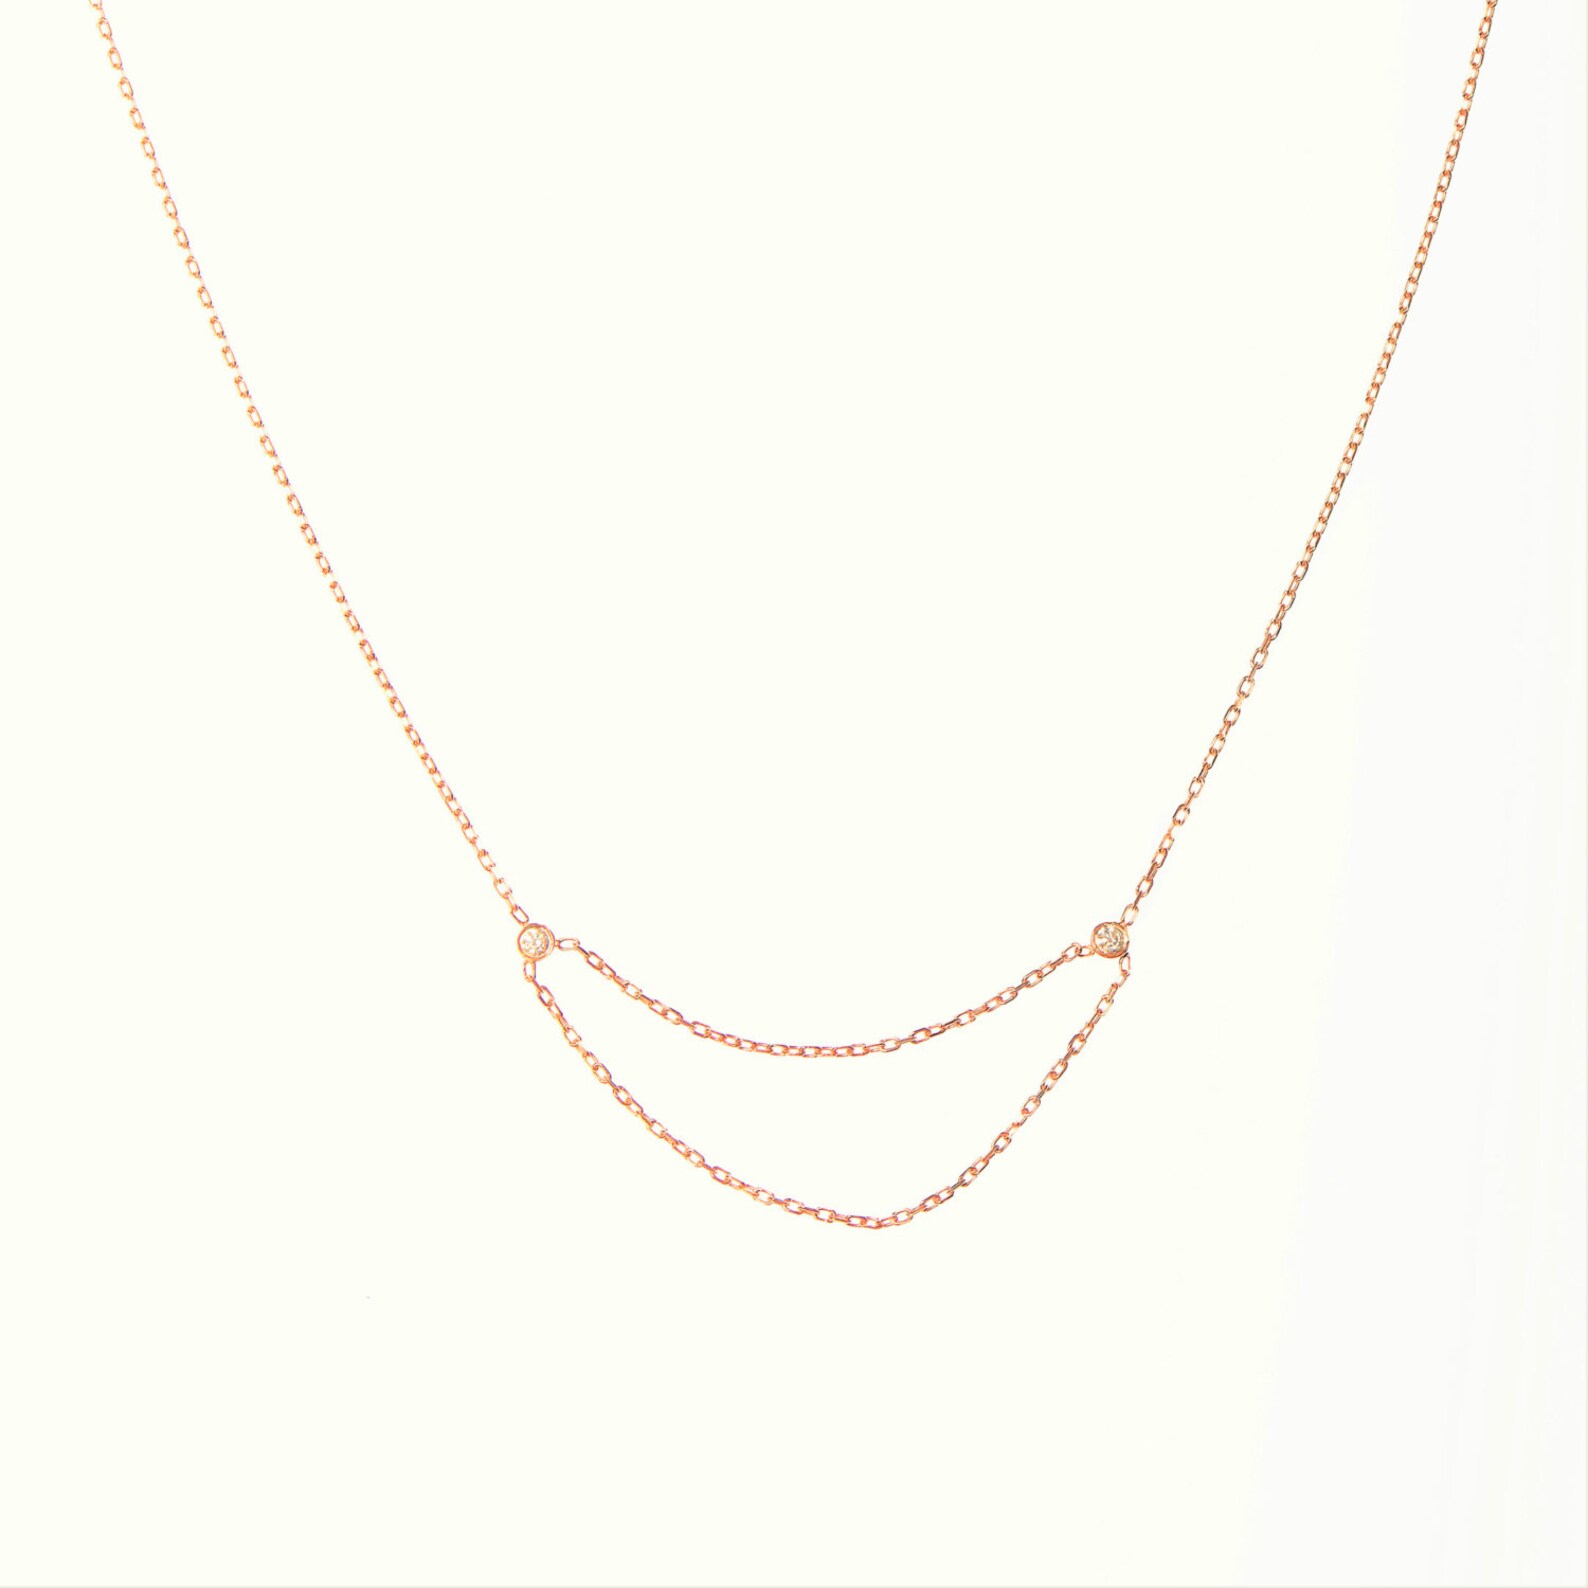 Diamond Necklace Chain Necklace Minimalist Necklace Gold | Etsy